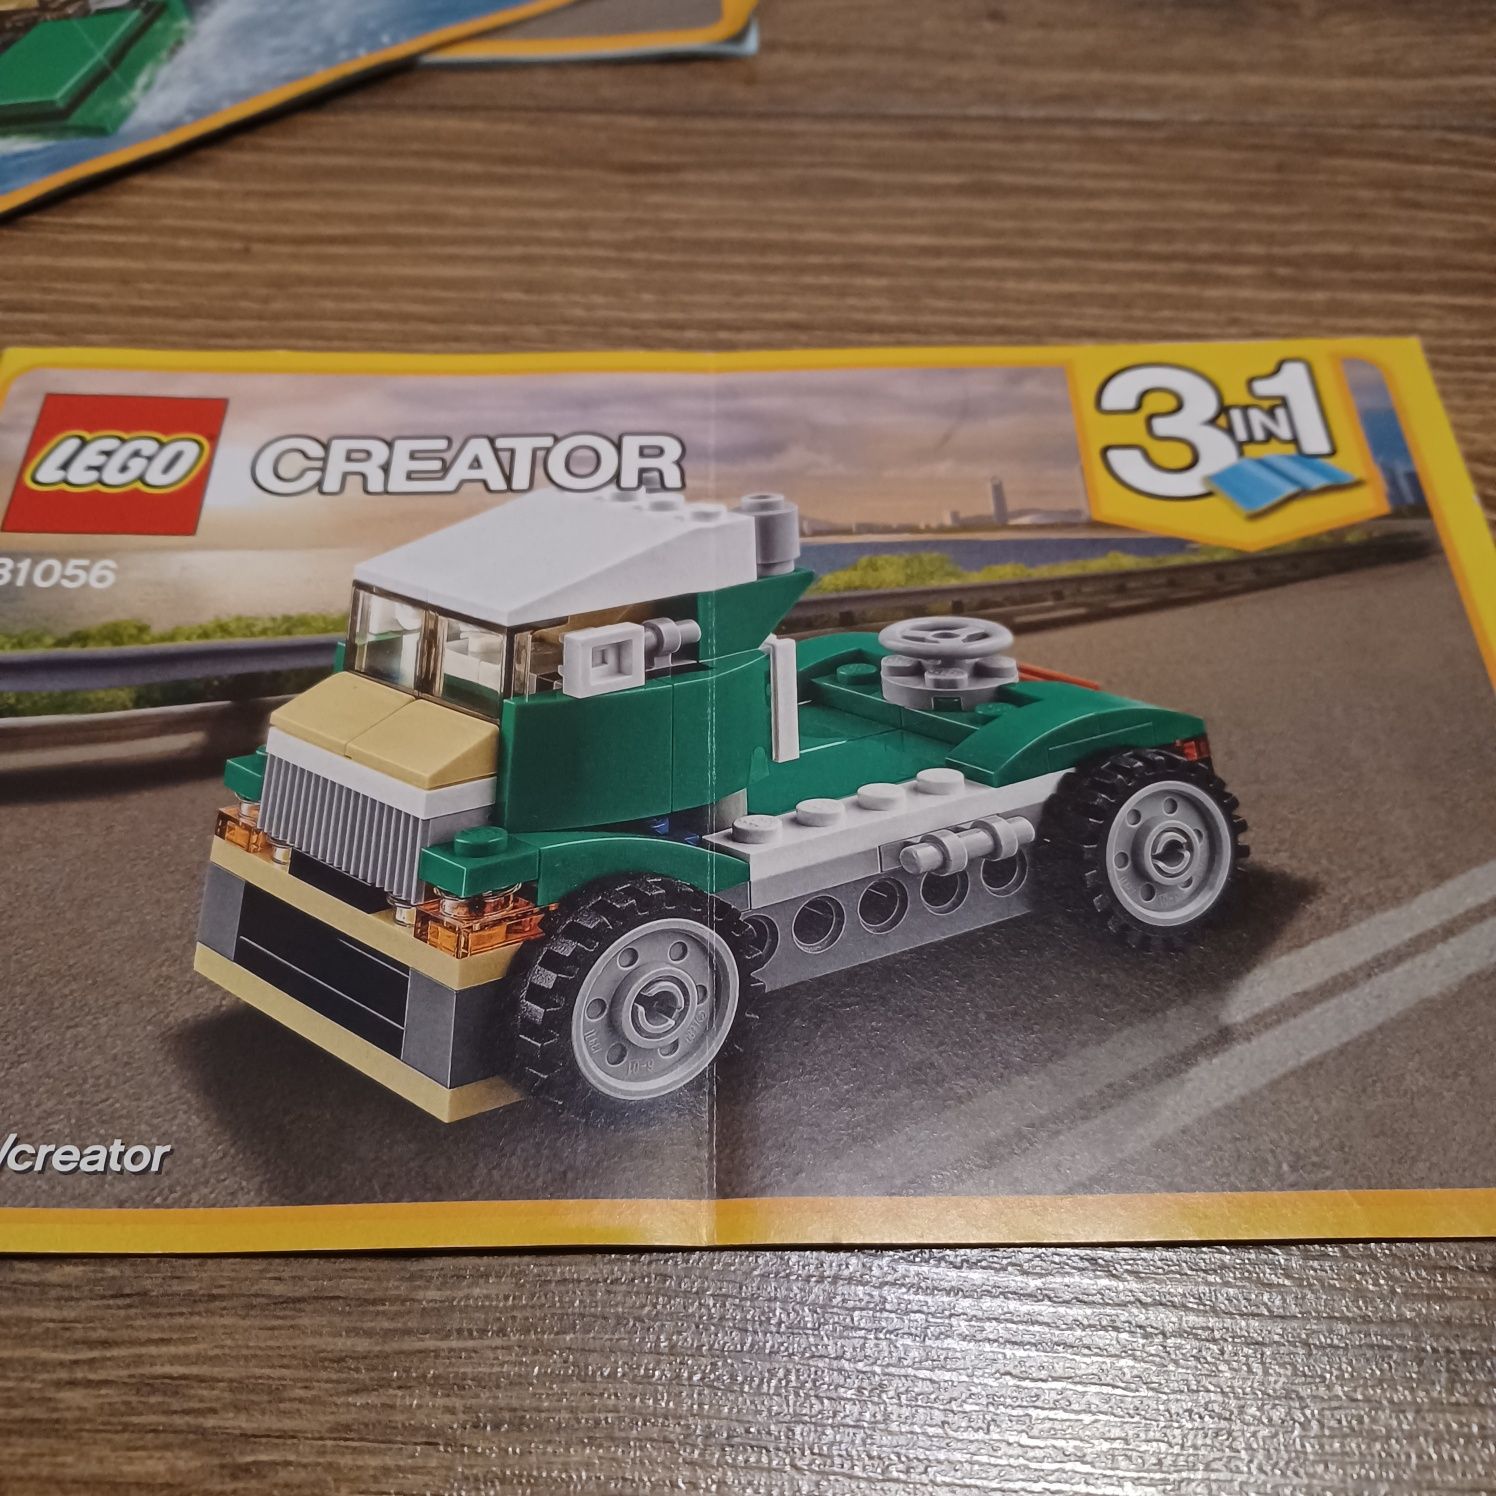 Lego creator 31056